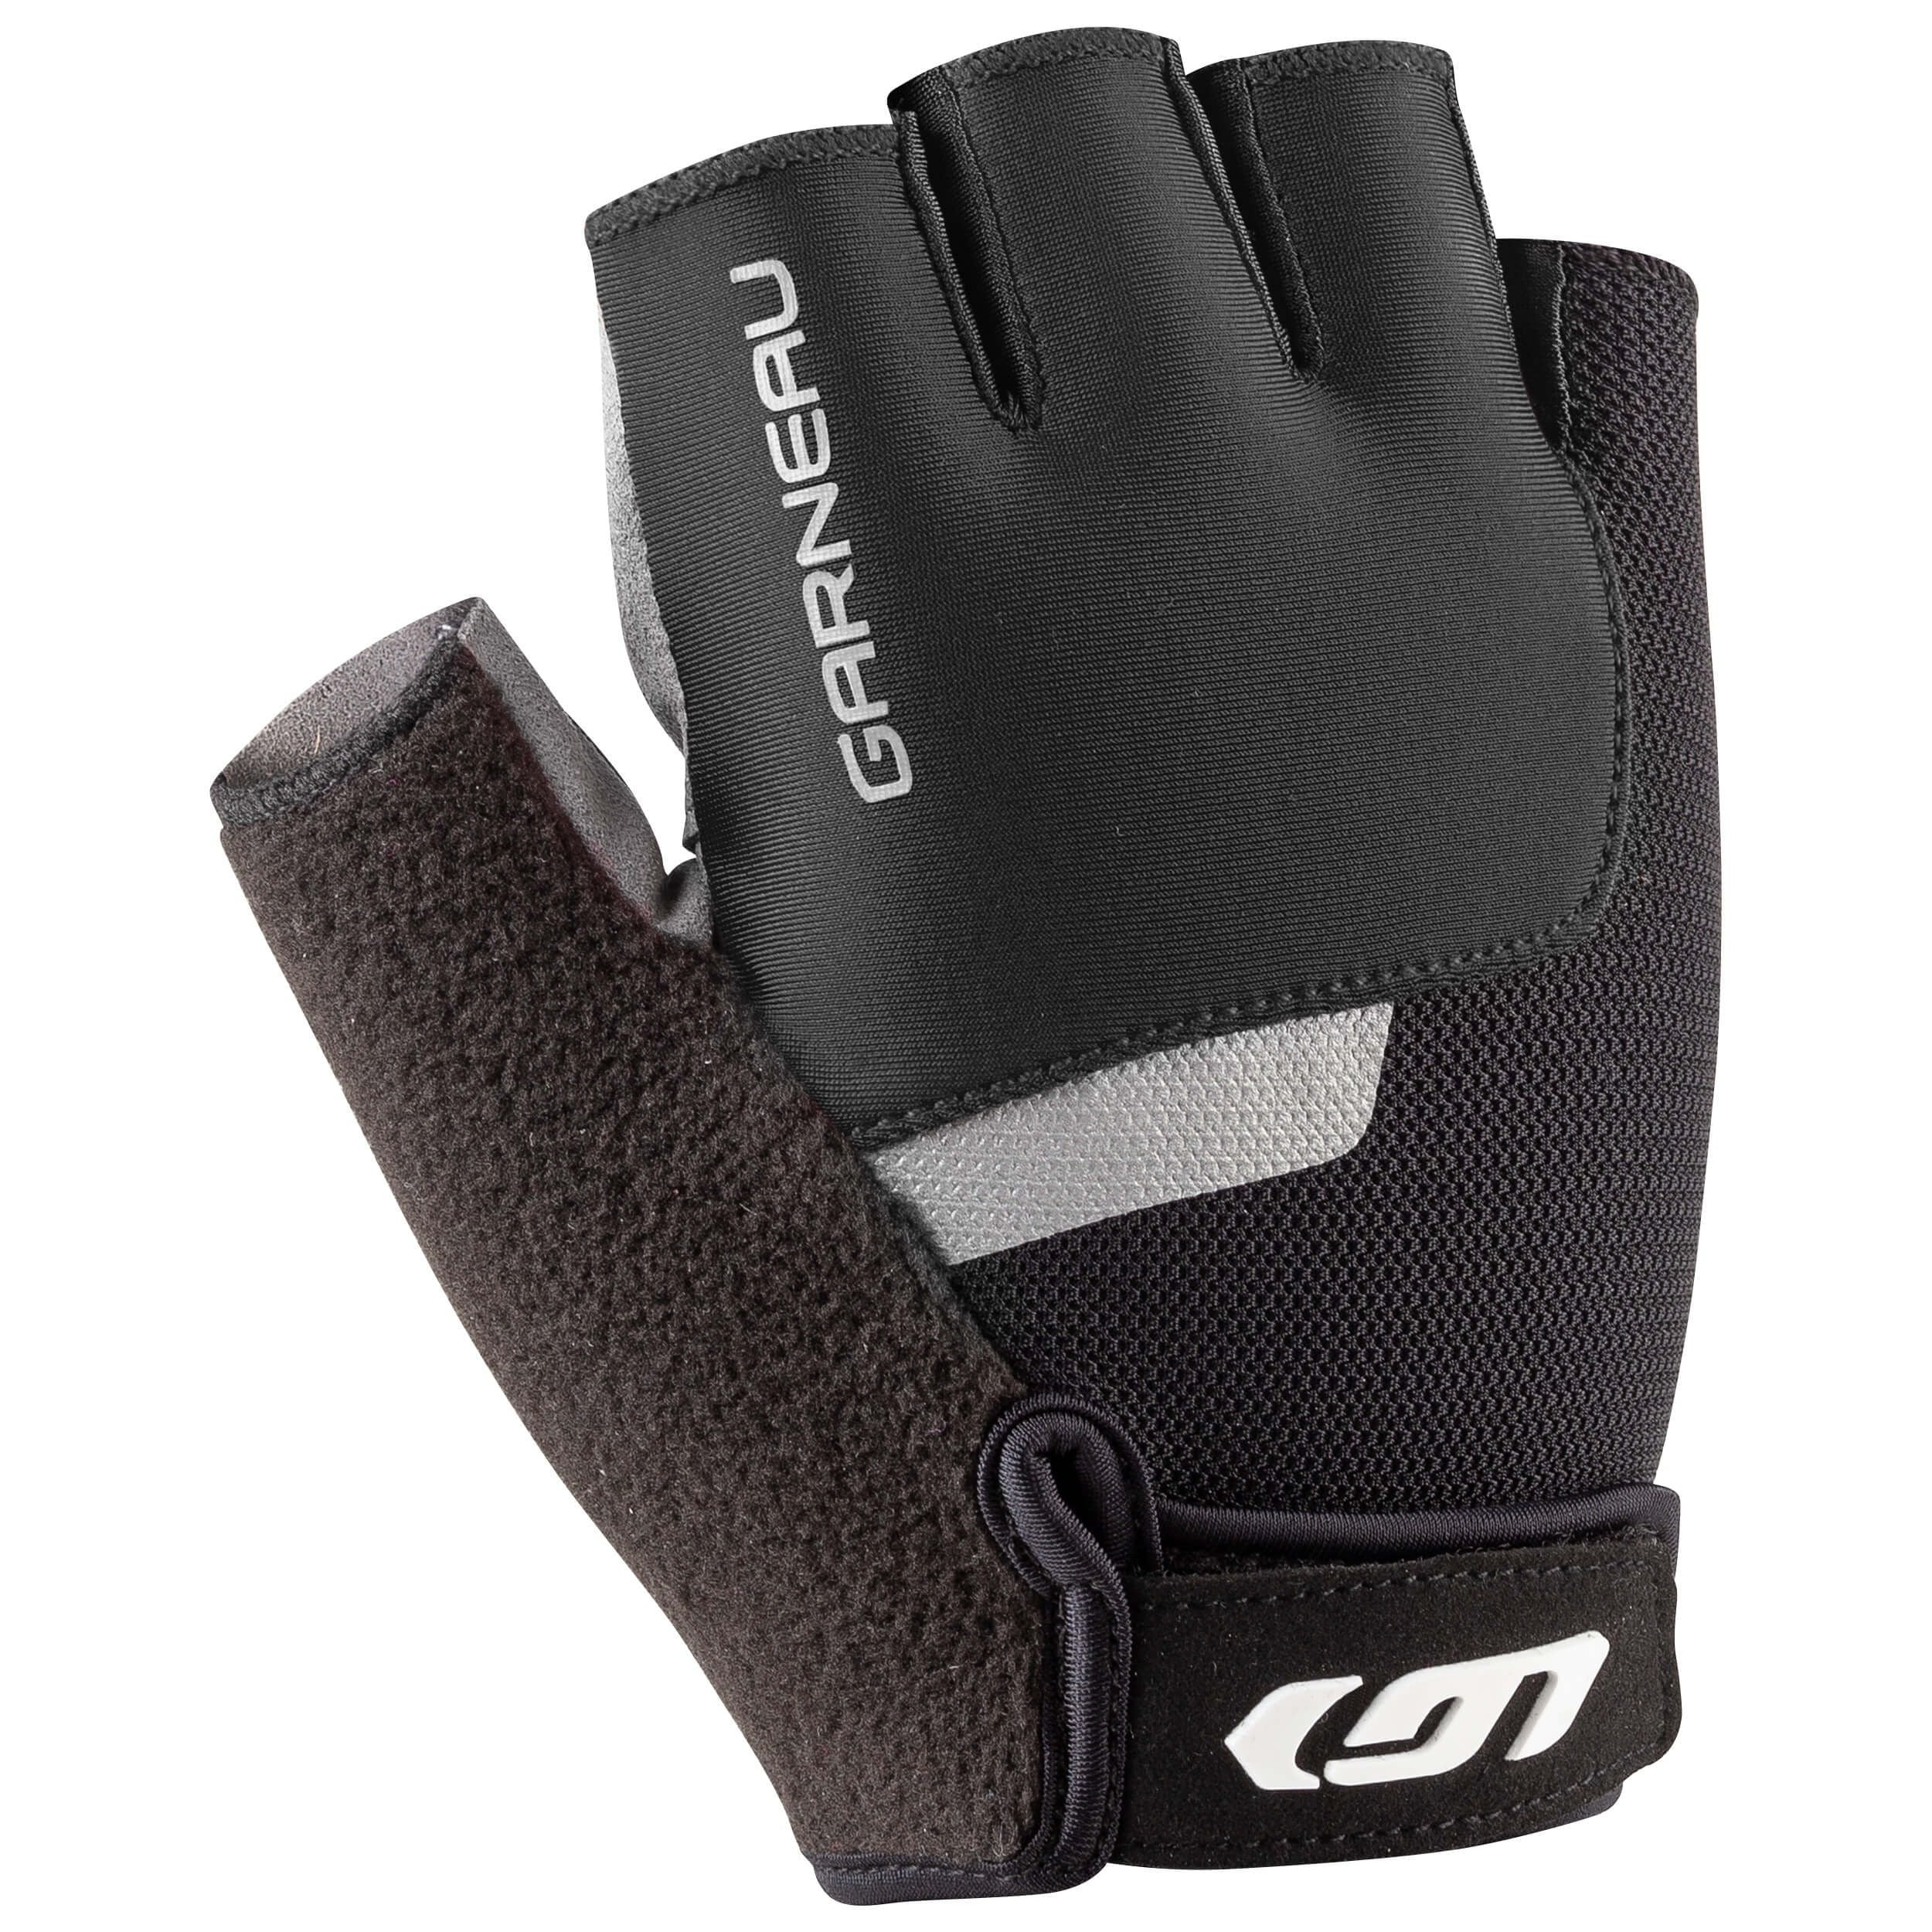 Garneau Biogel RX-V2 Gloves